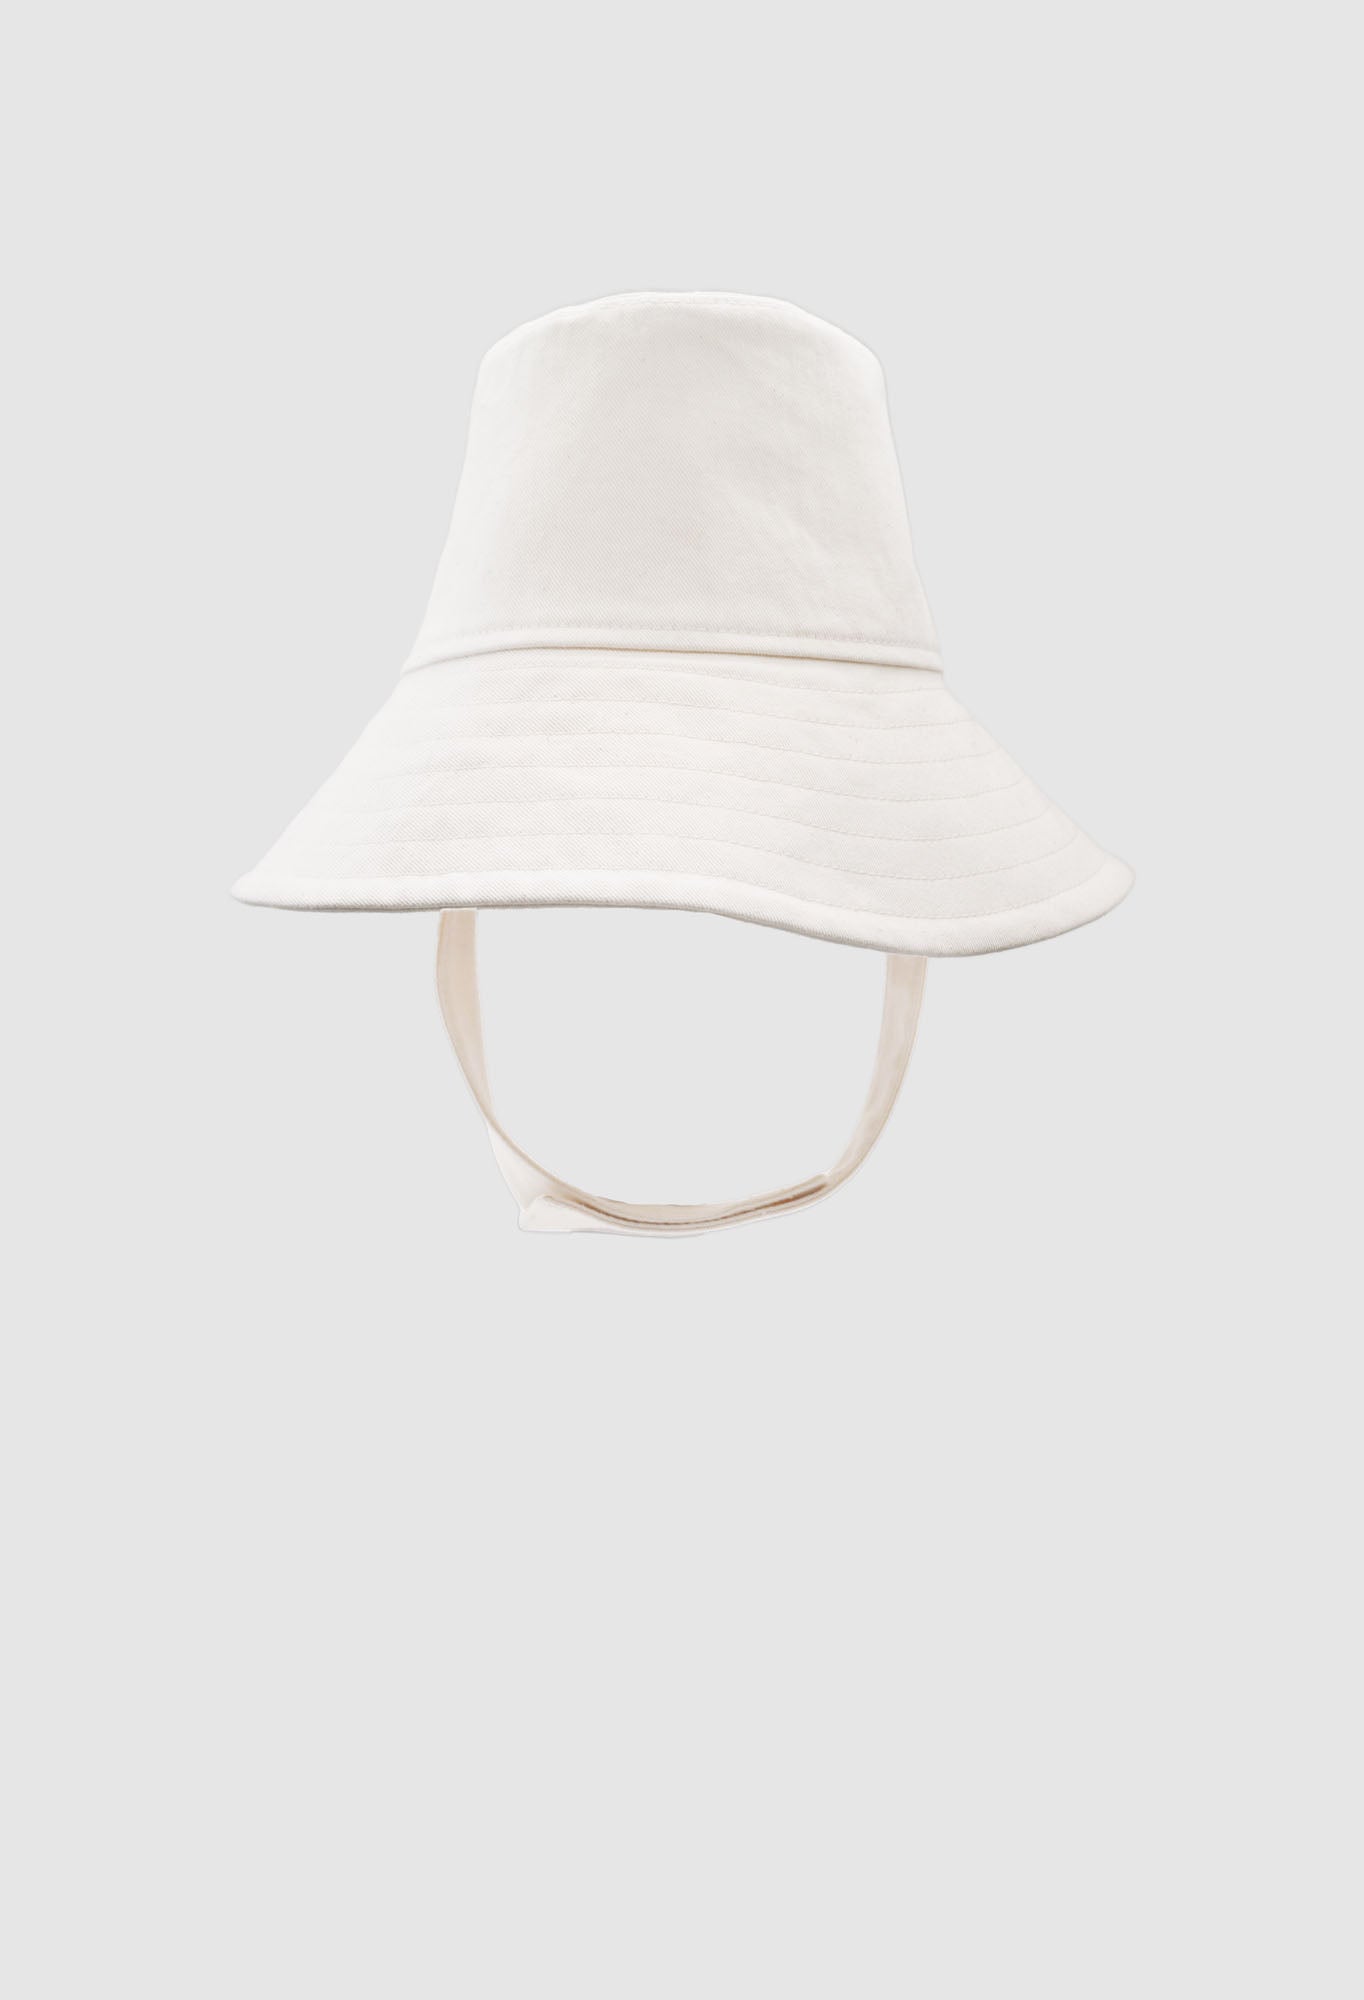 Japanese Organic Cotton Drill Bucket Hat with Large Brim